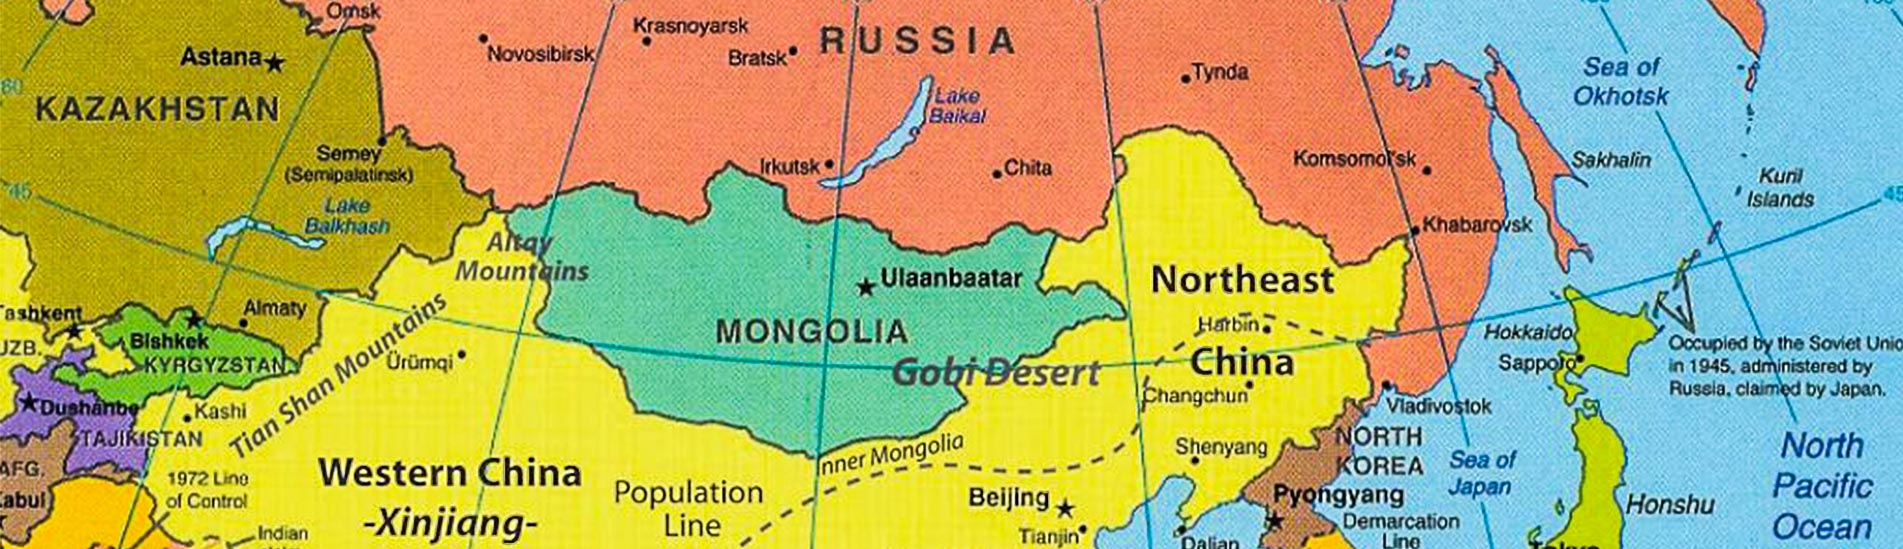 co-1-nat-geo-mongolia-location